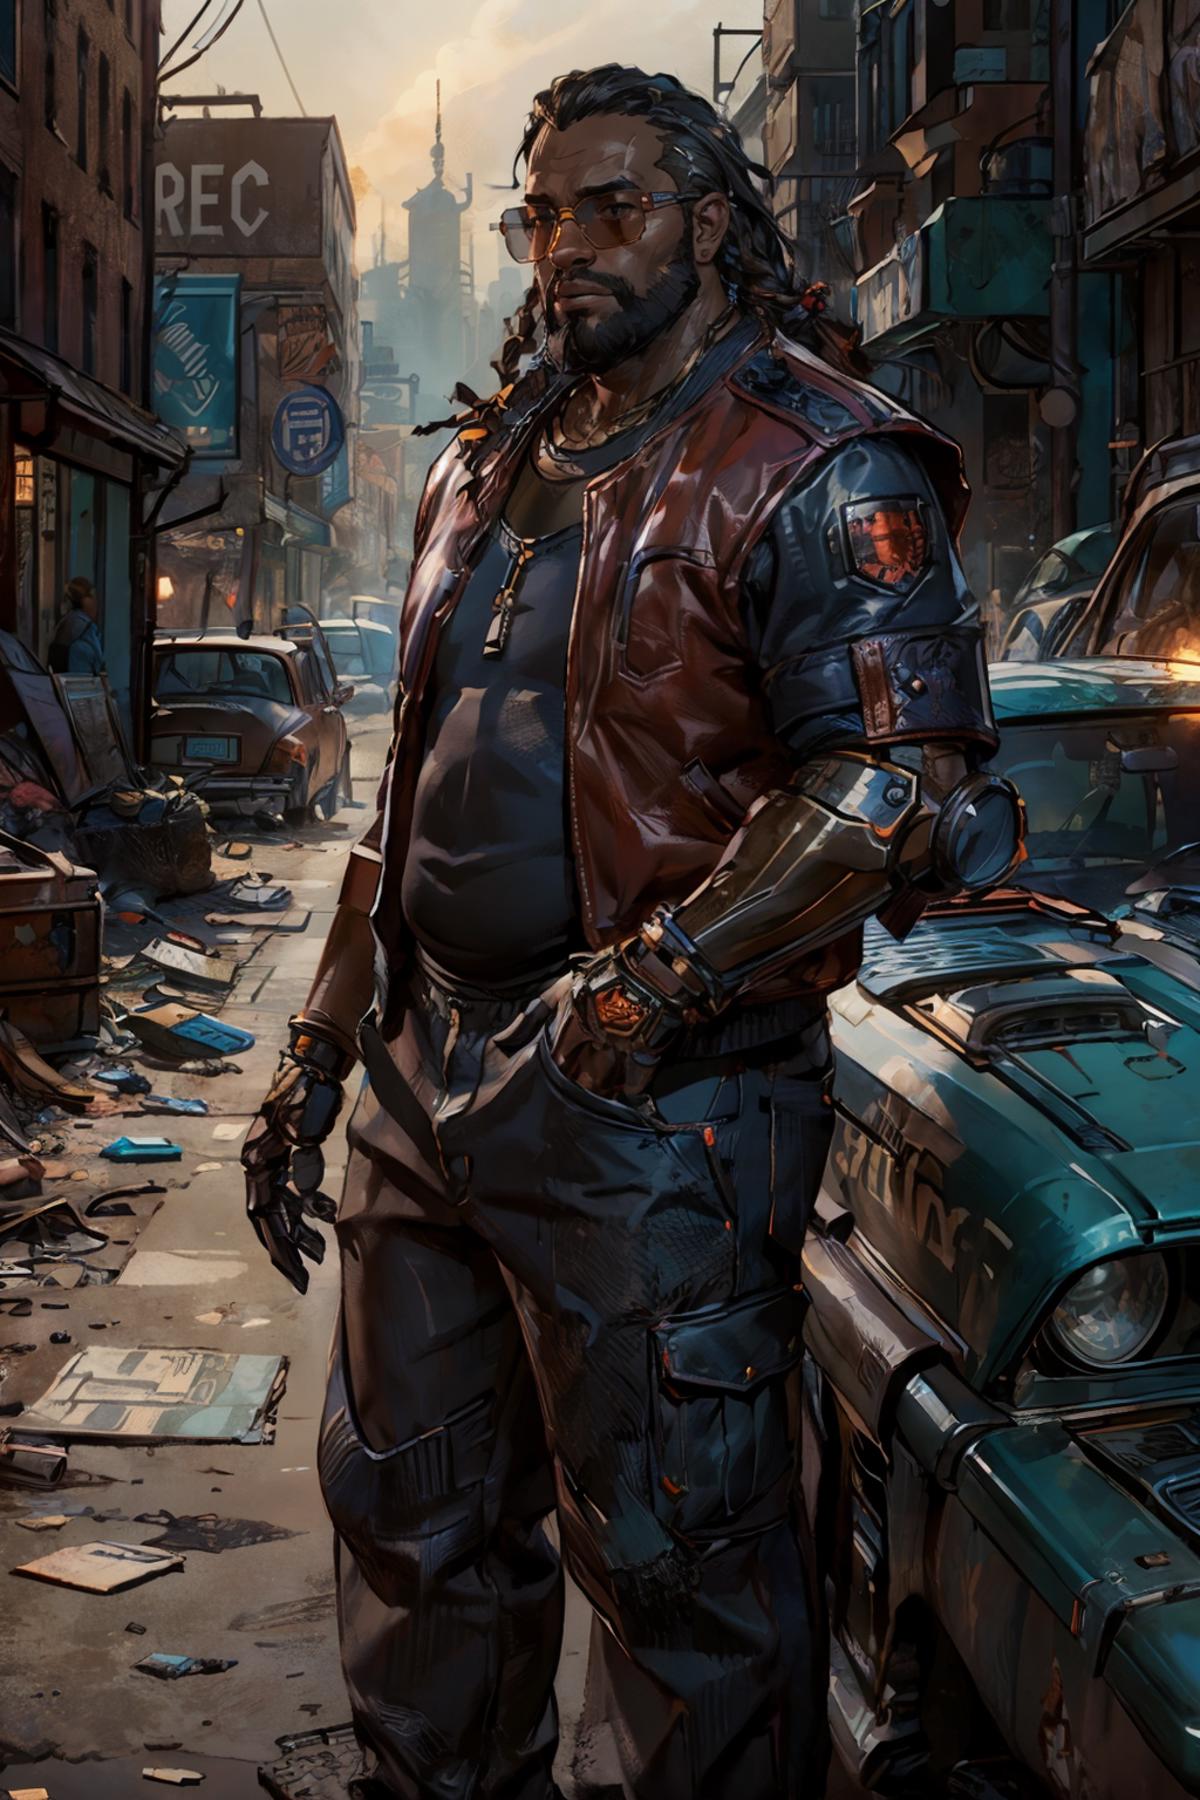 Dexter DeShawn from Cyberpunk 2077 image by wikkitikki